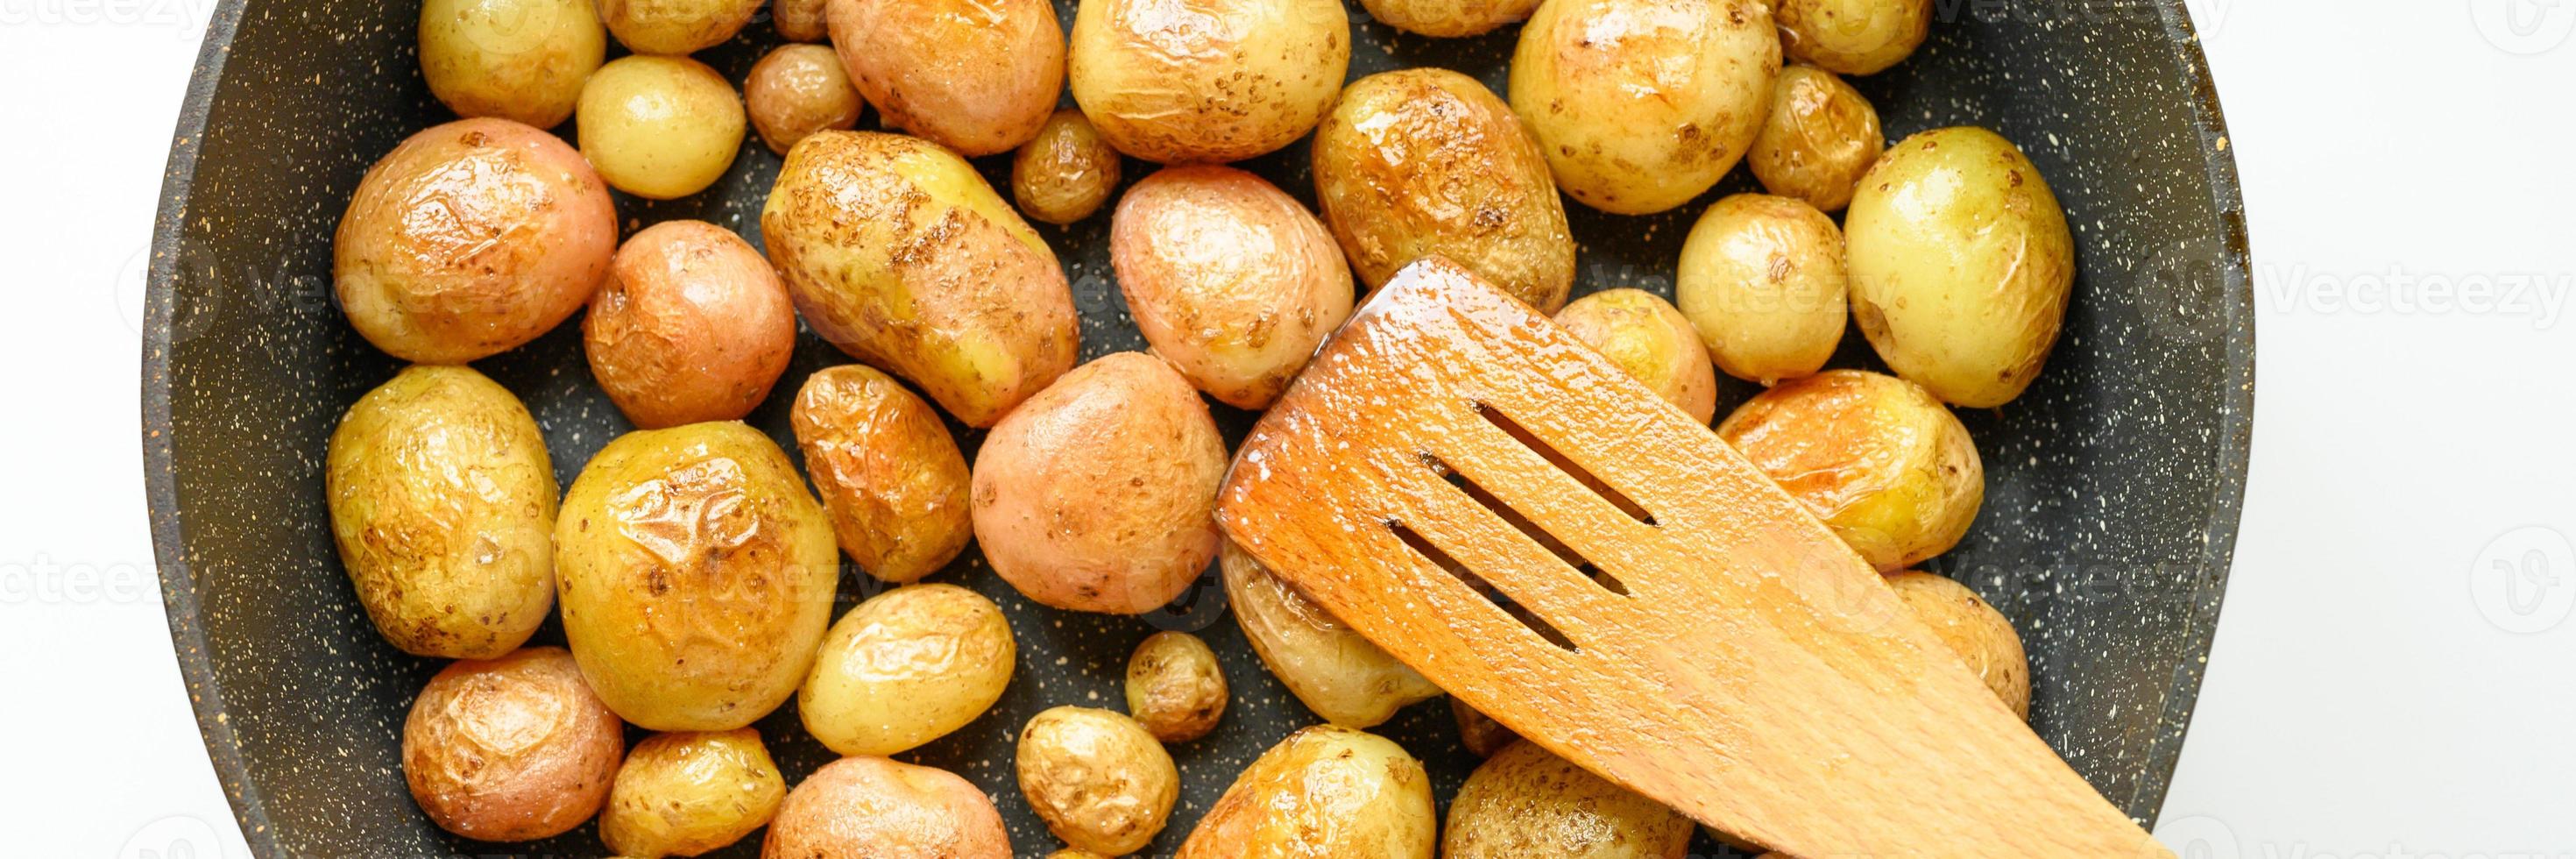 goldene Bratkartoffeln in der Haut foto